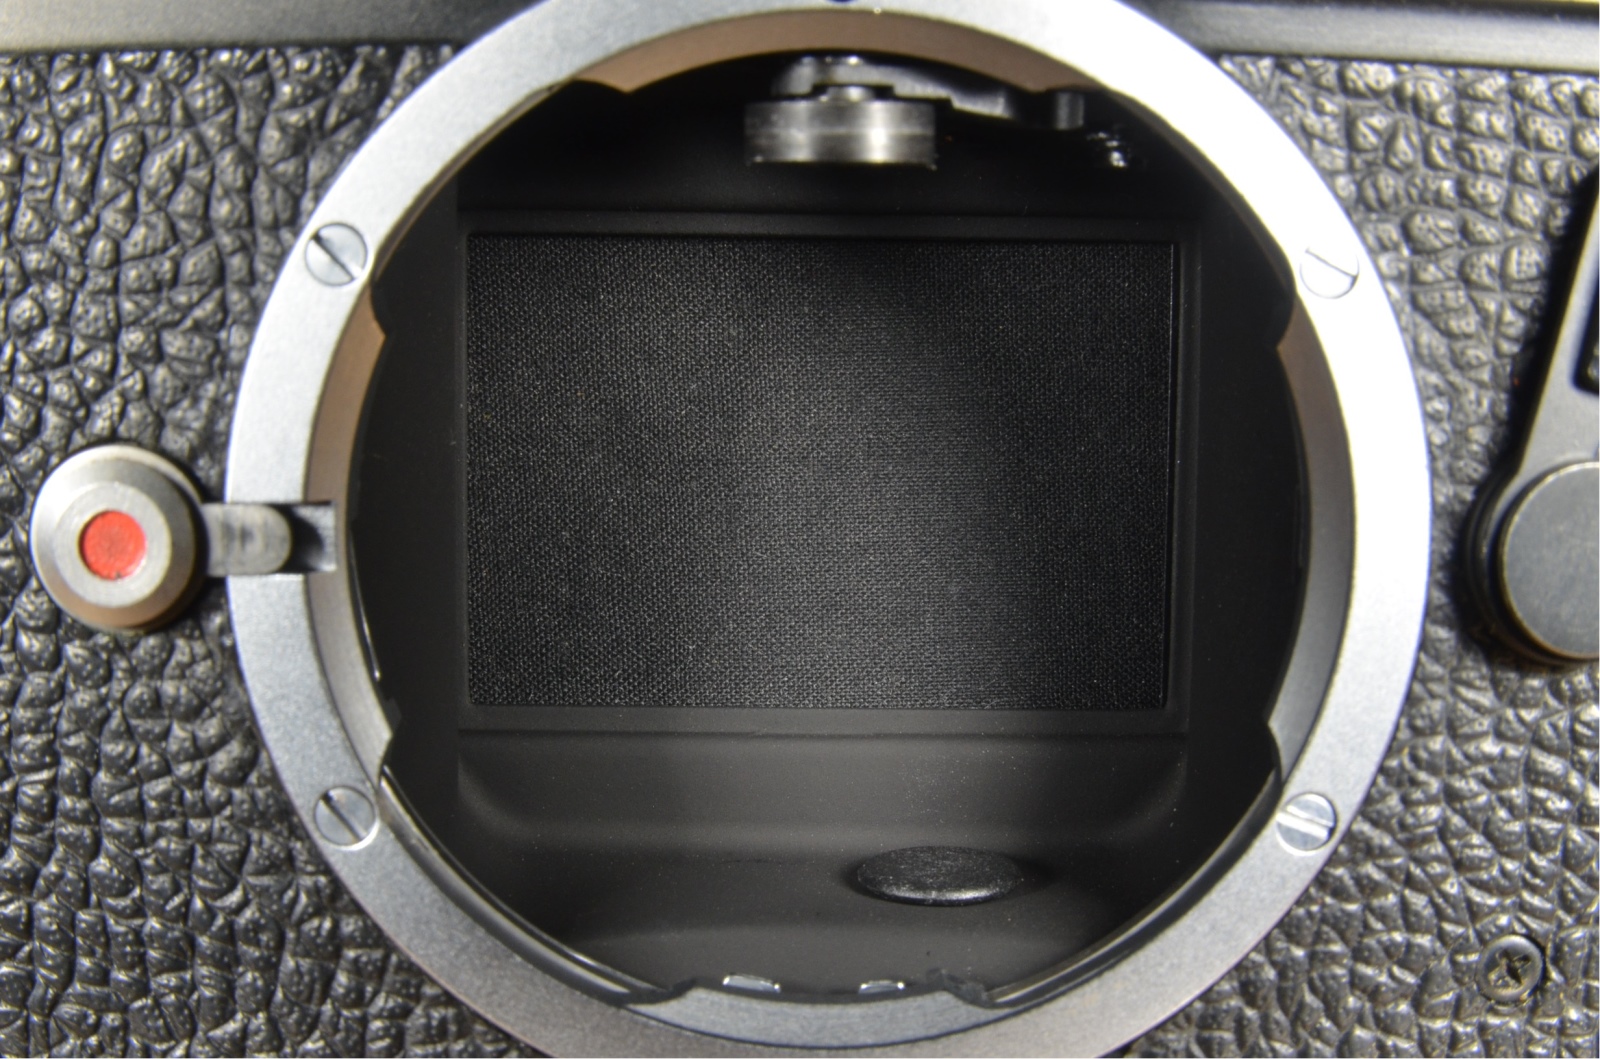 leica m4-p black 35mm rangefinder film camera s/n *1552782 with strap